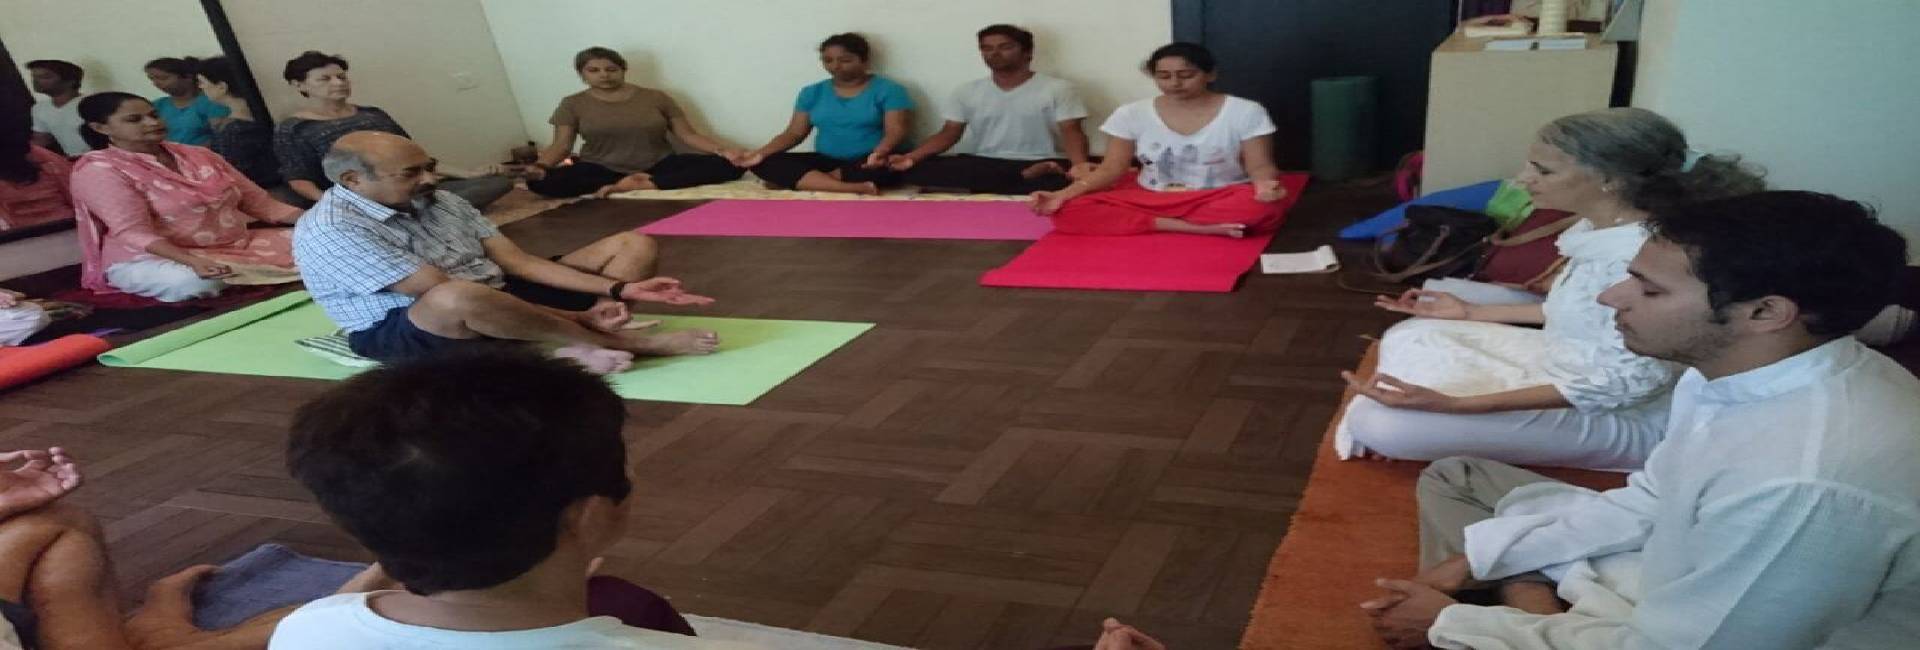 Yoga Class in Goa